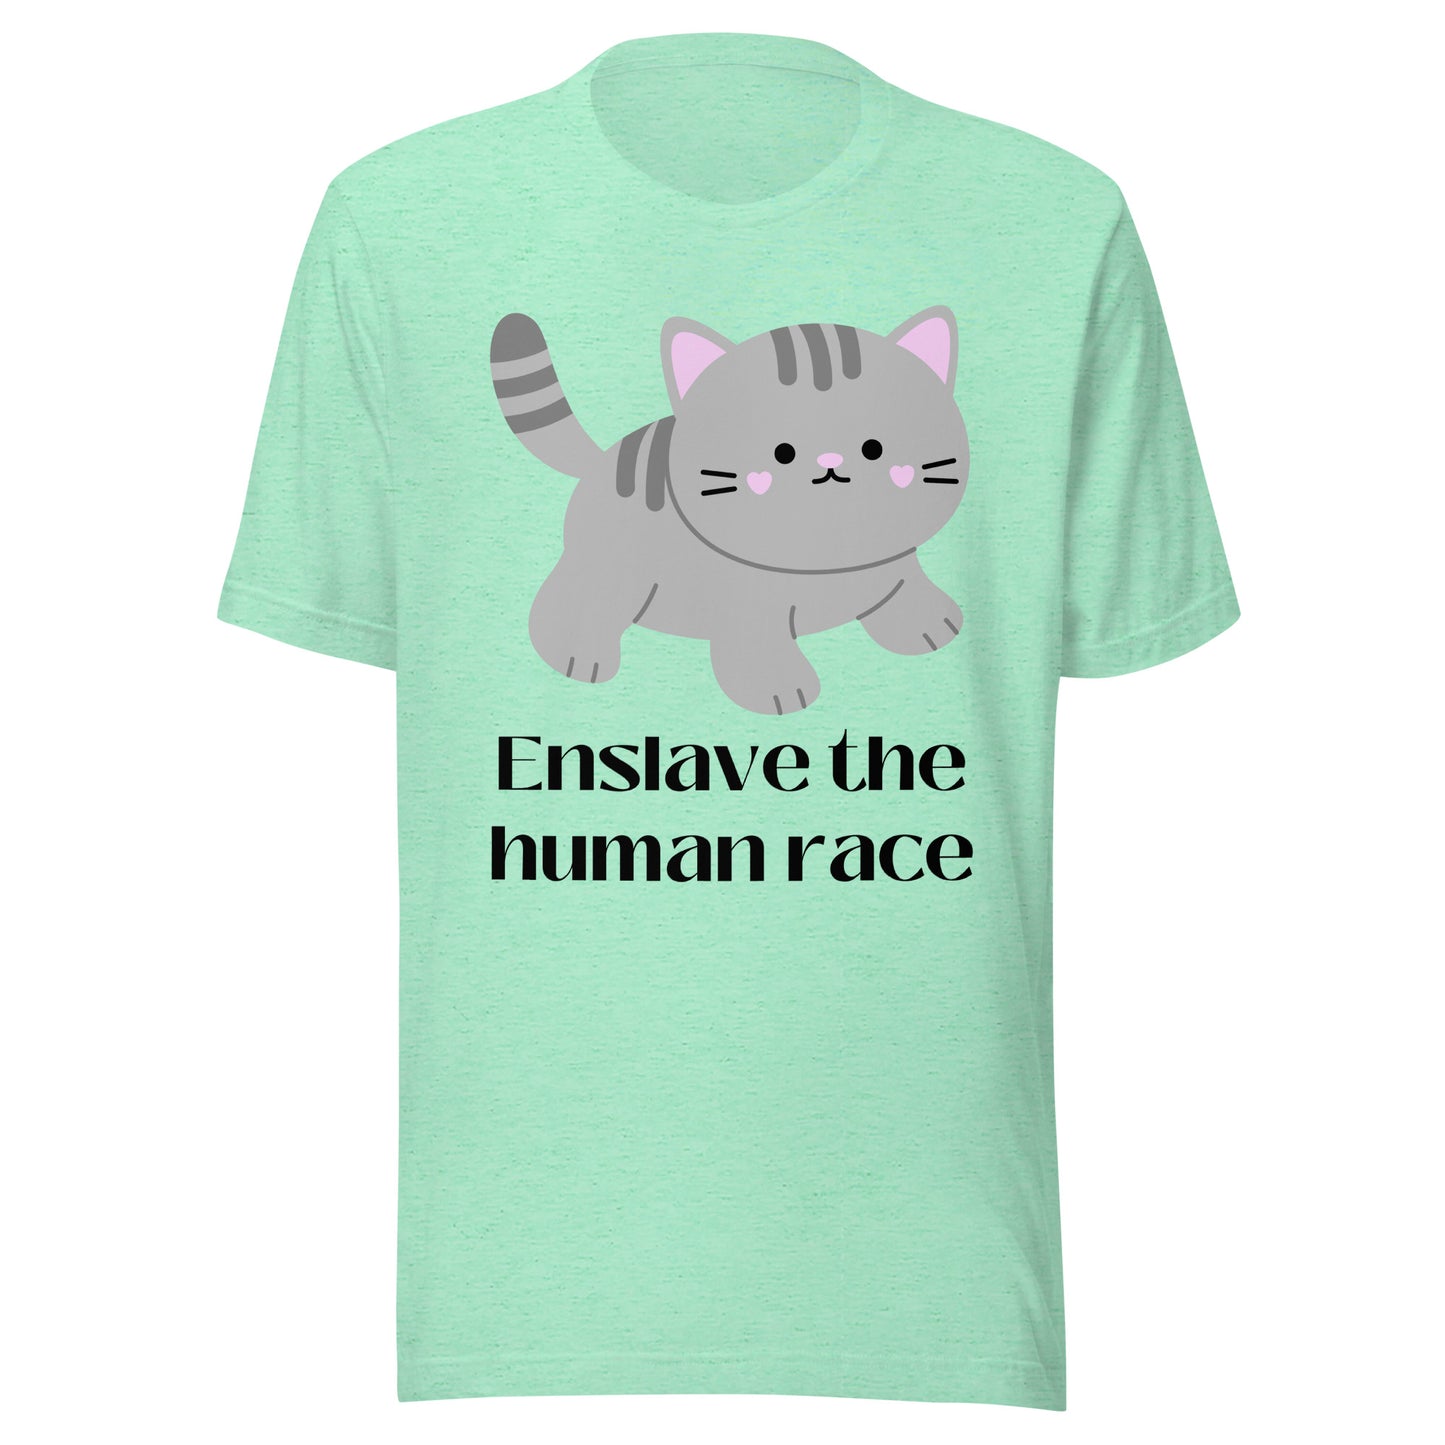 "Enslave the human race" - Unisex t-shirt